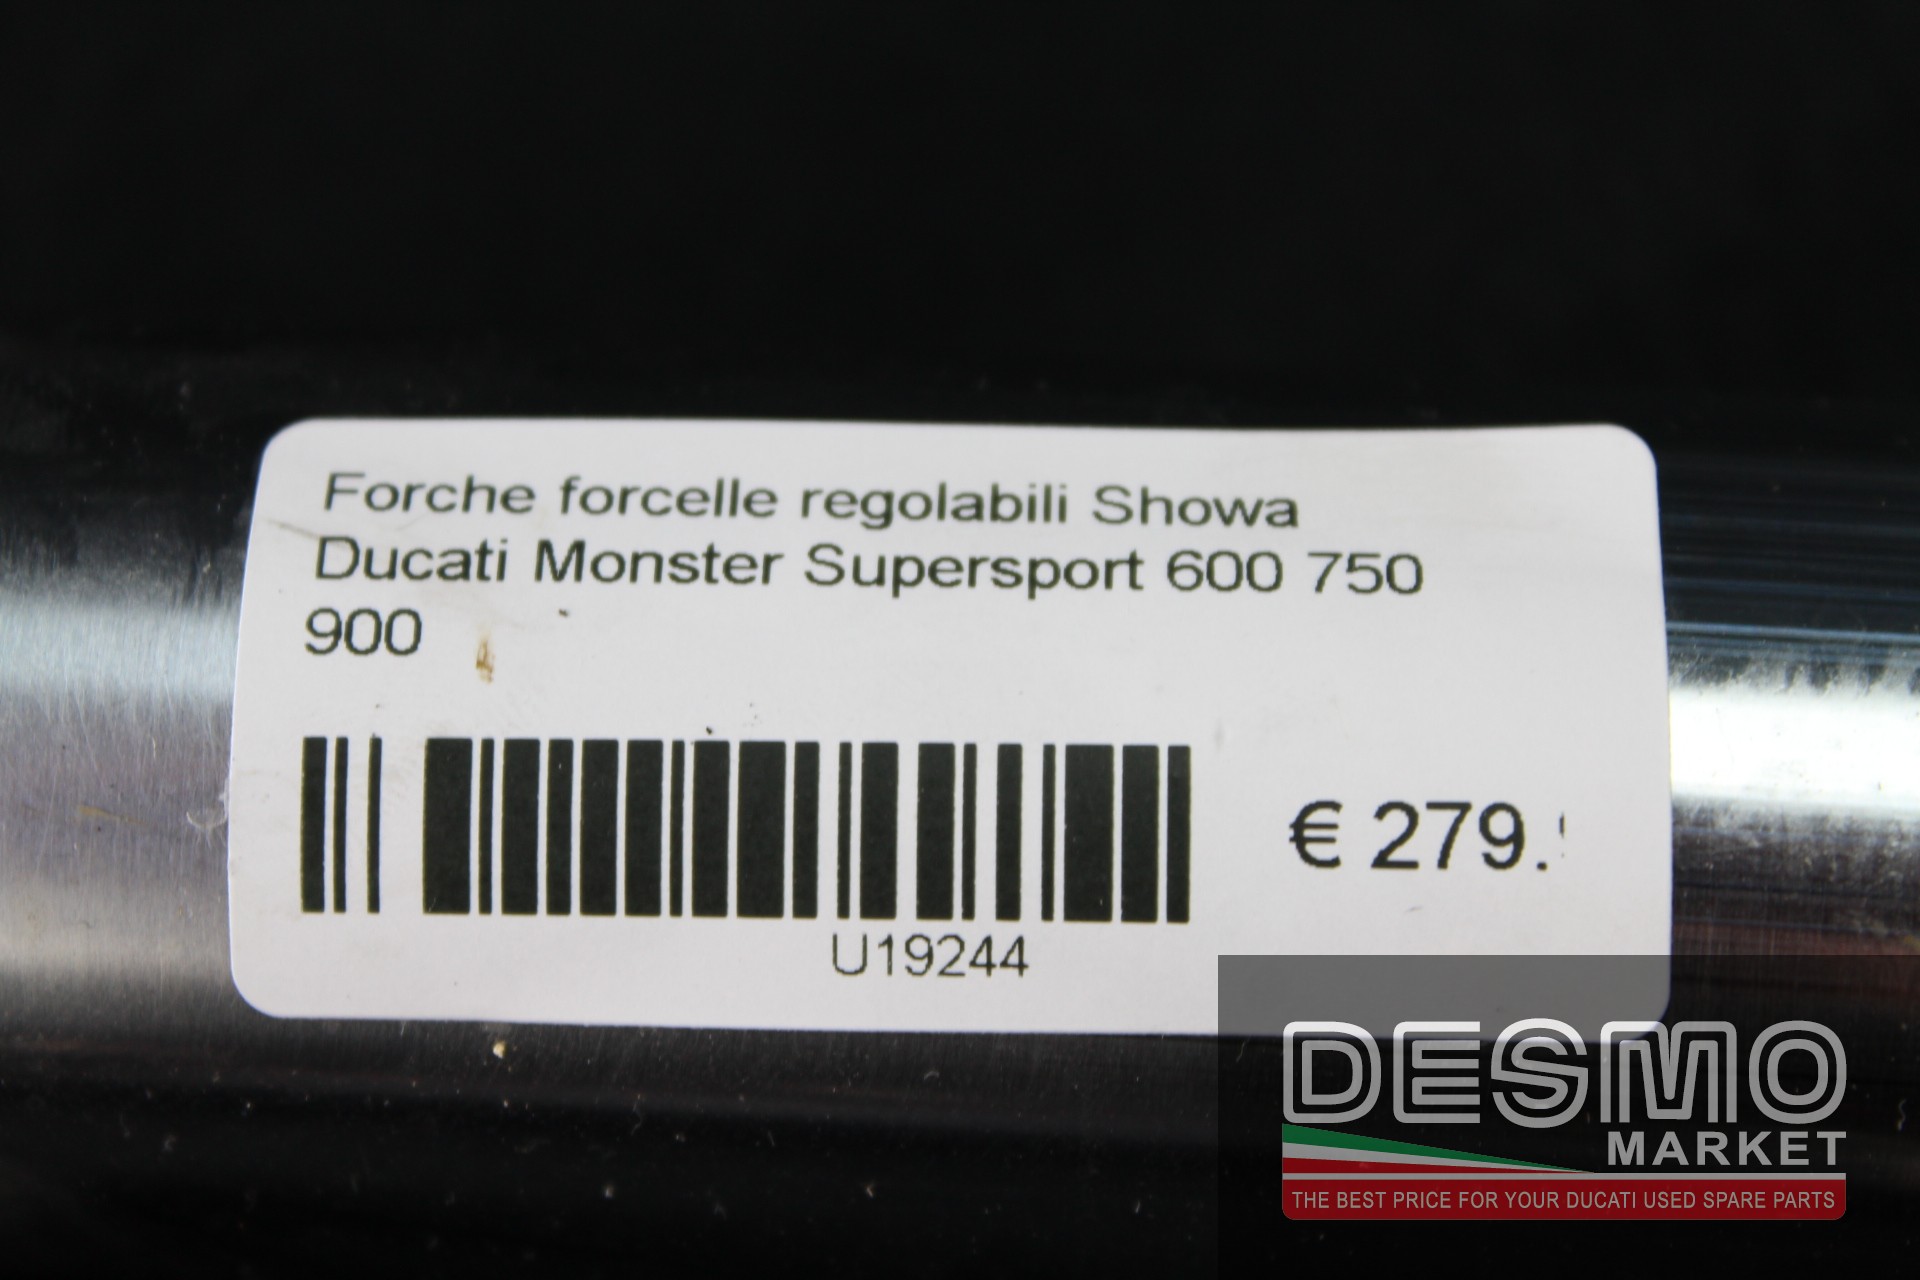 Forche forcelle regolabili Showa Ducati Monster Supersport 600 750 900